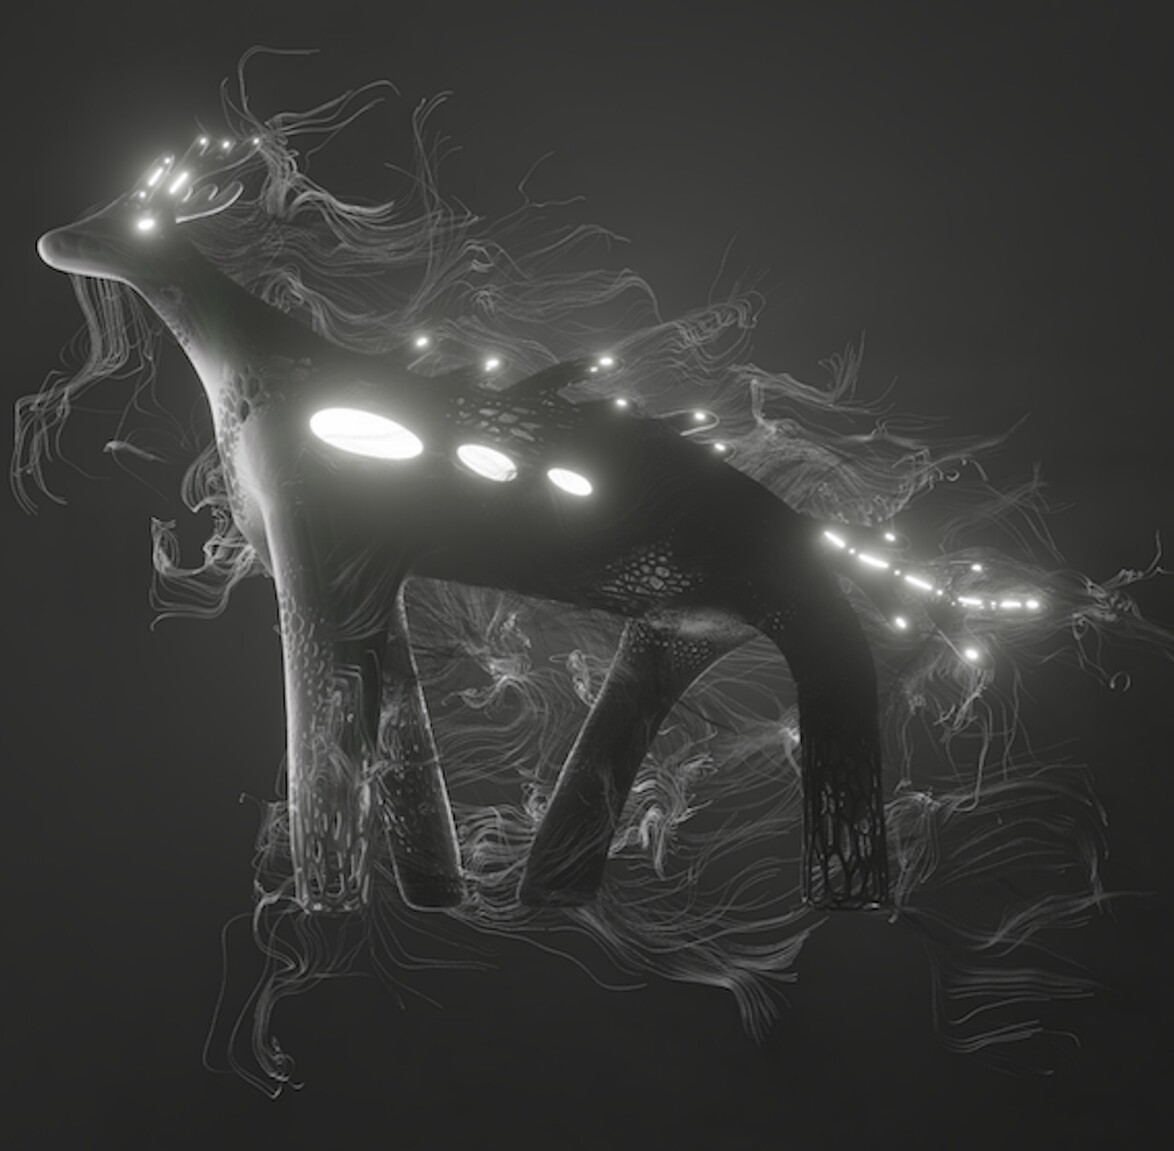 CHEN Pu
Symbiosis_Divergent Deer
2022
Hand-drawn, digital calculation, photographic paper
90×140×3cm